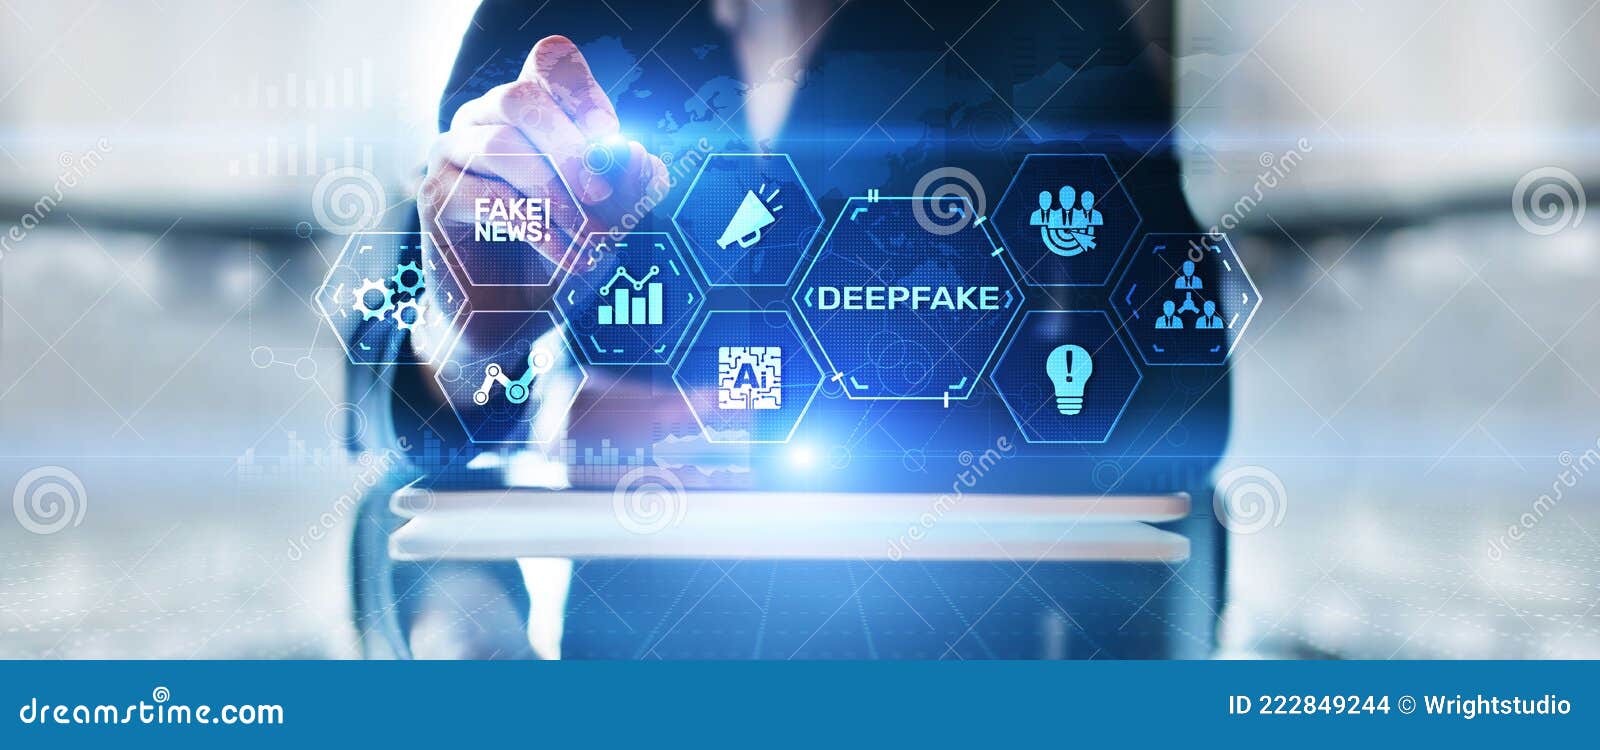 deepfake deep learning fake news generator modern internet technology concept